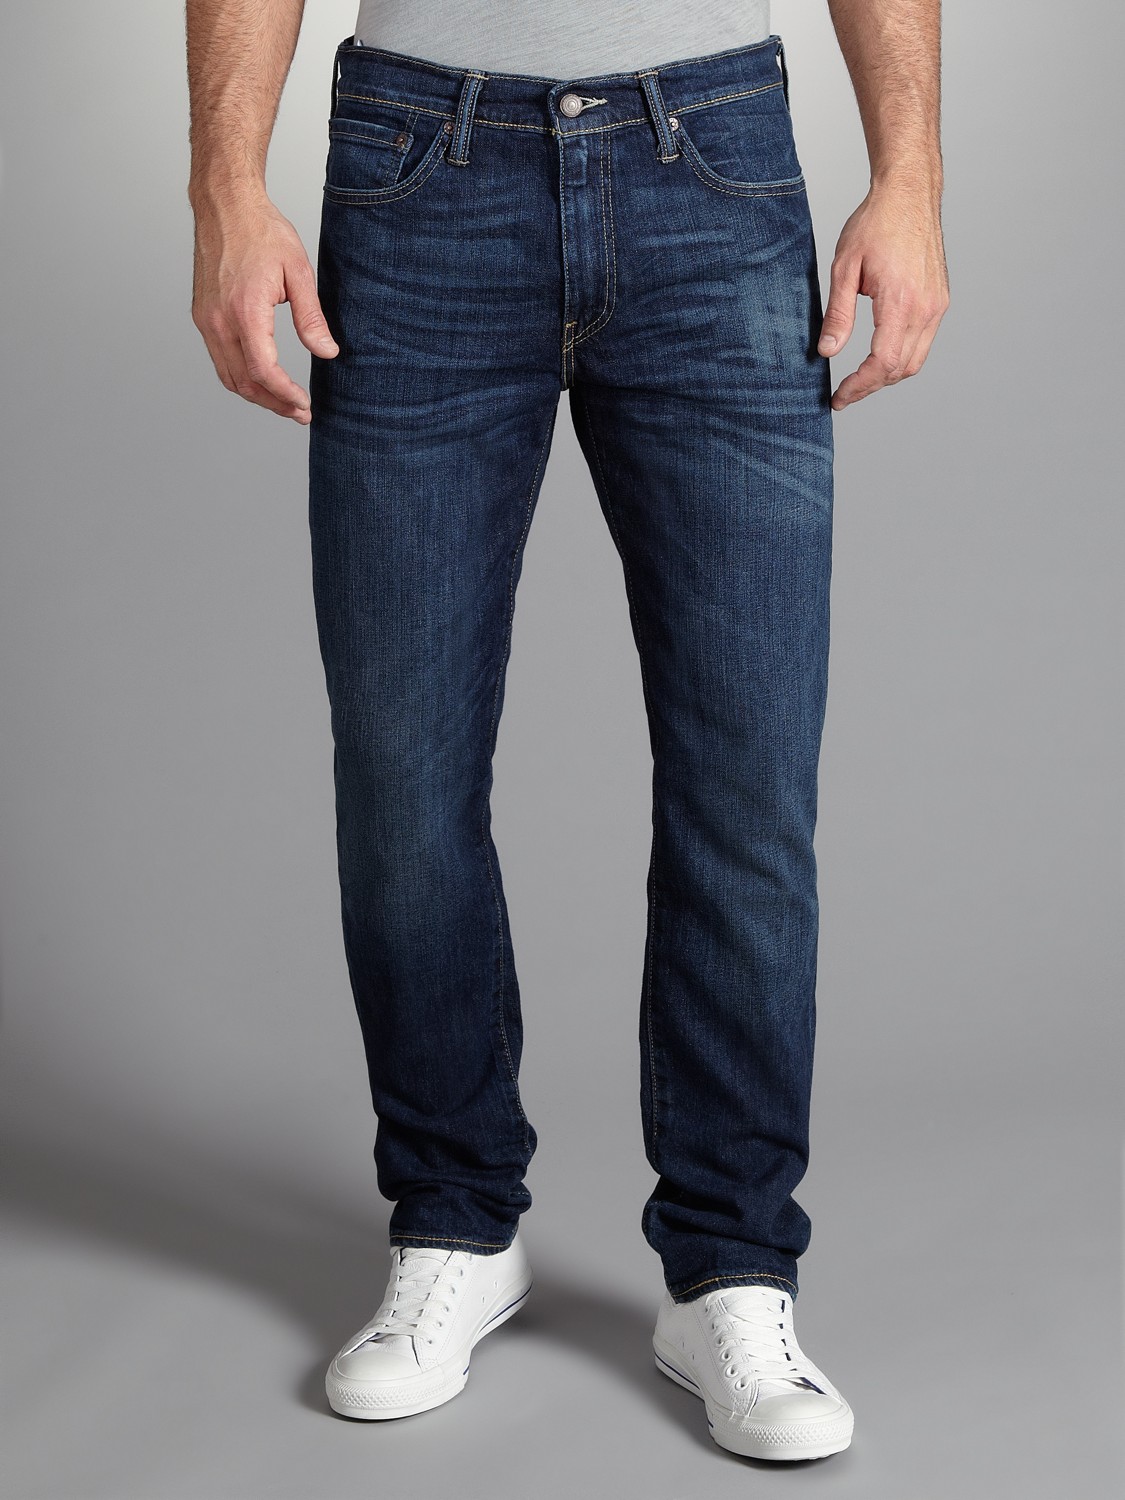 Lyst - Levi'S 511 Slim Jeans in Blue for Men